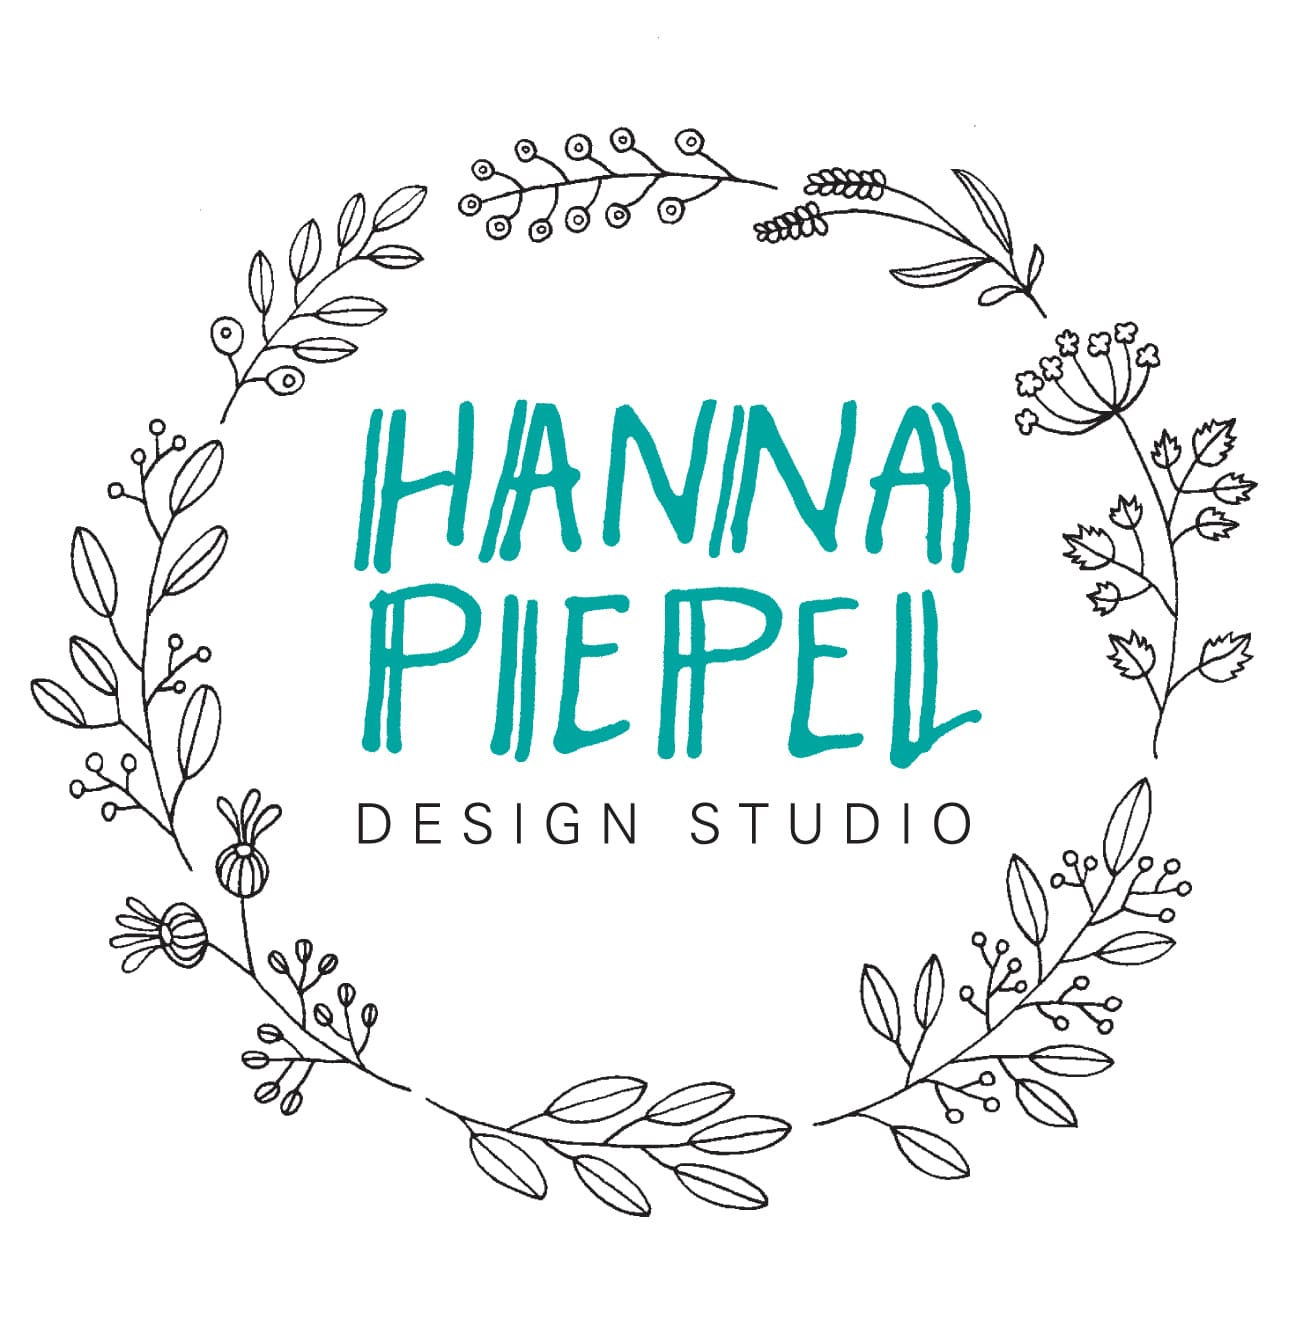 Image of Hanna Piepel Design Studio